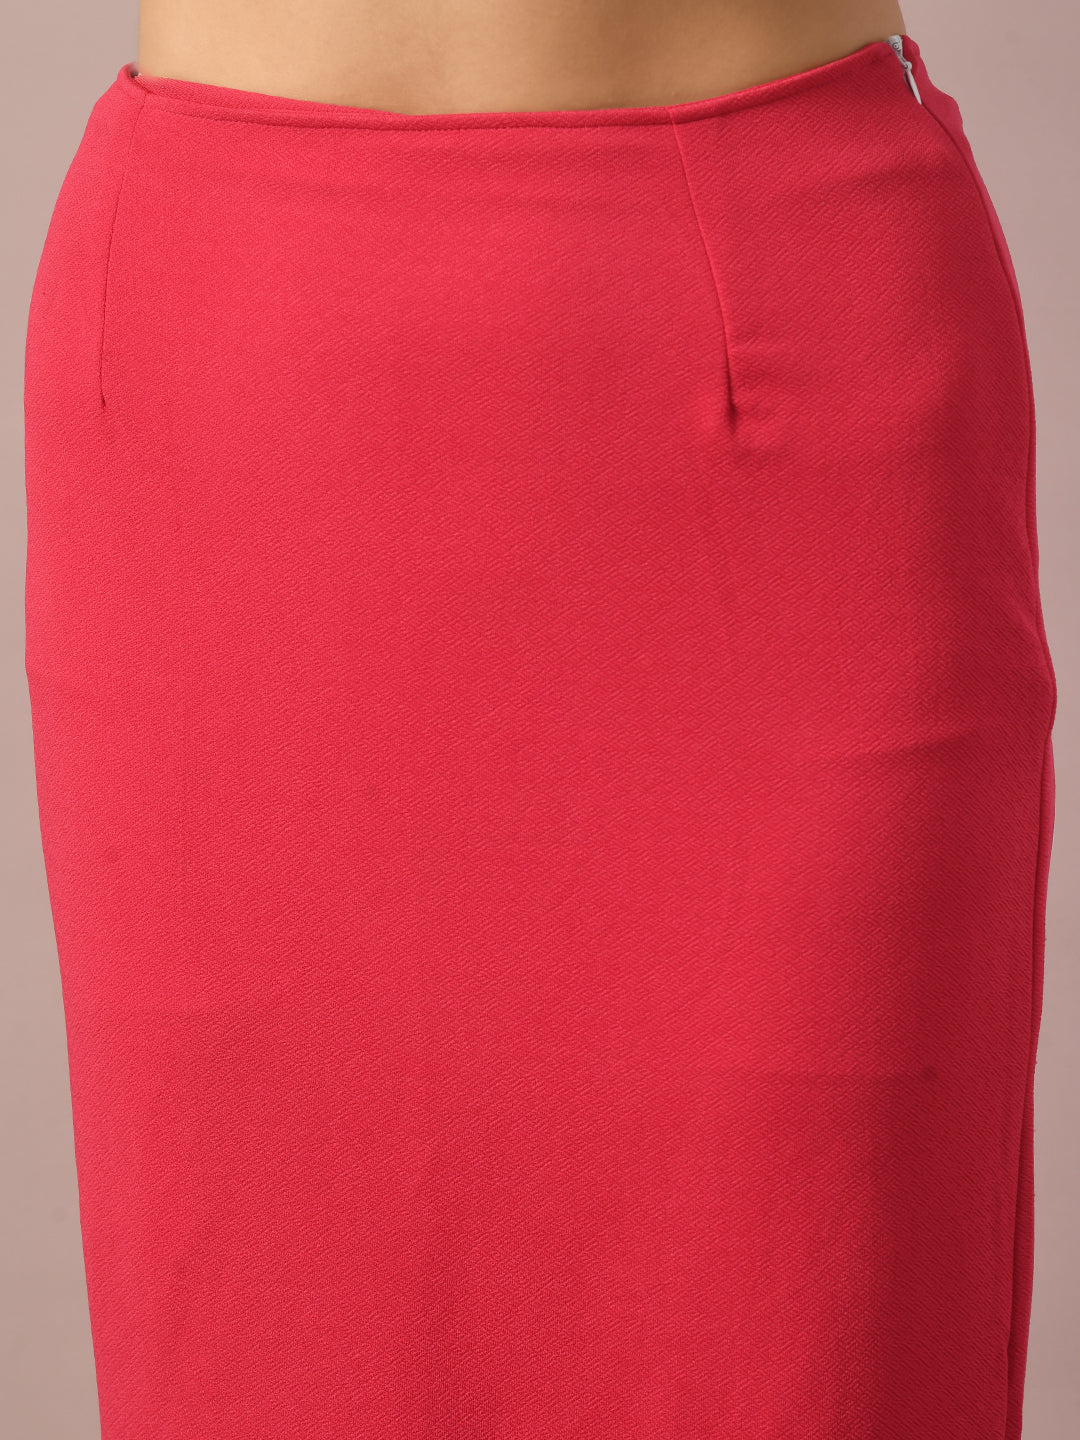 Women's  Pink Solid Knee Length Party Embellished Skirts   - Myshka